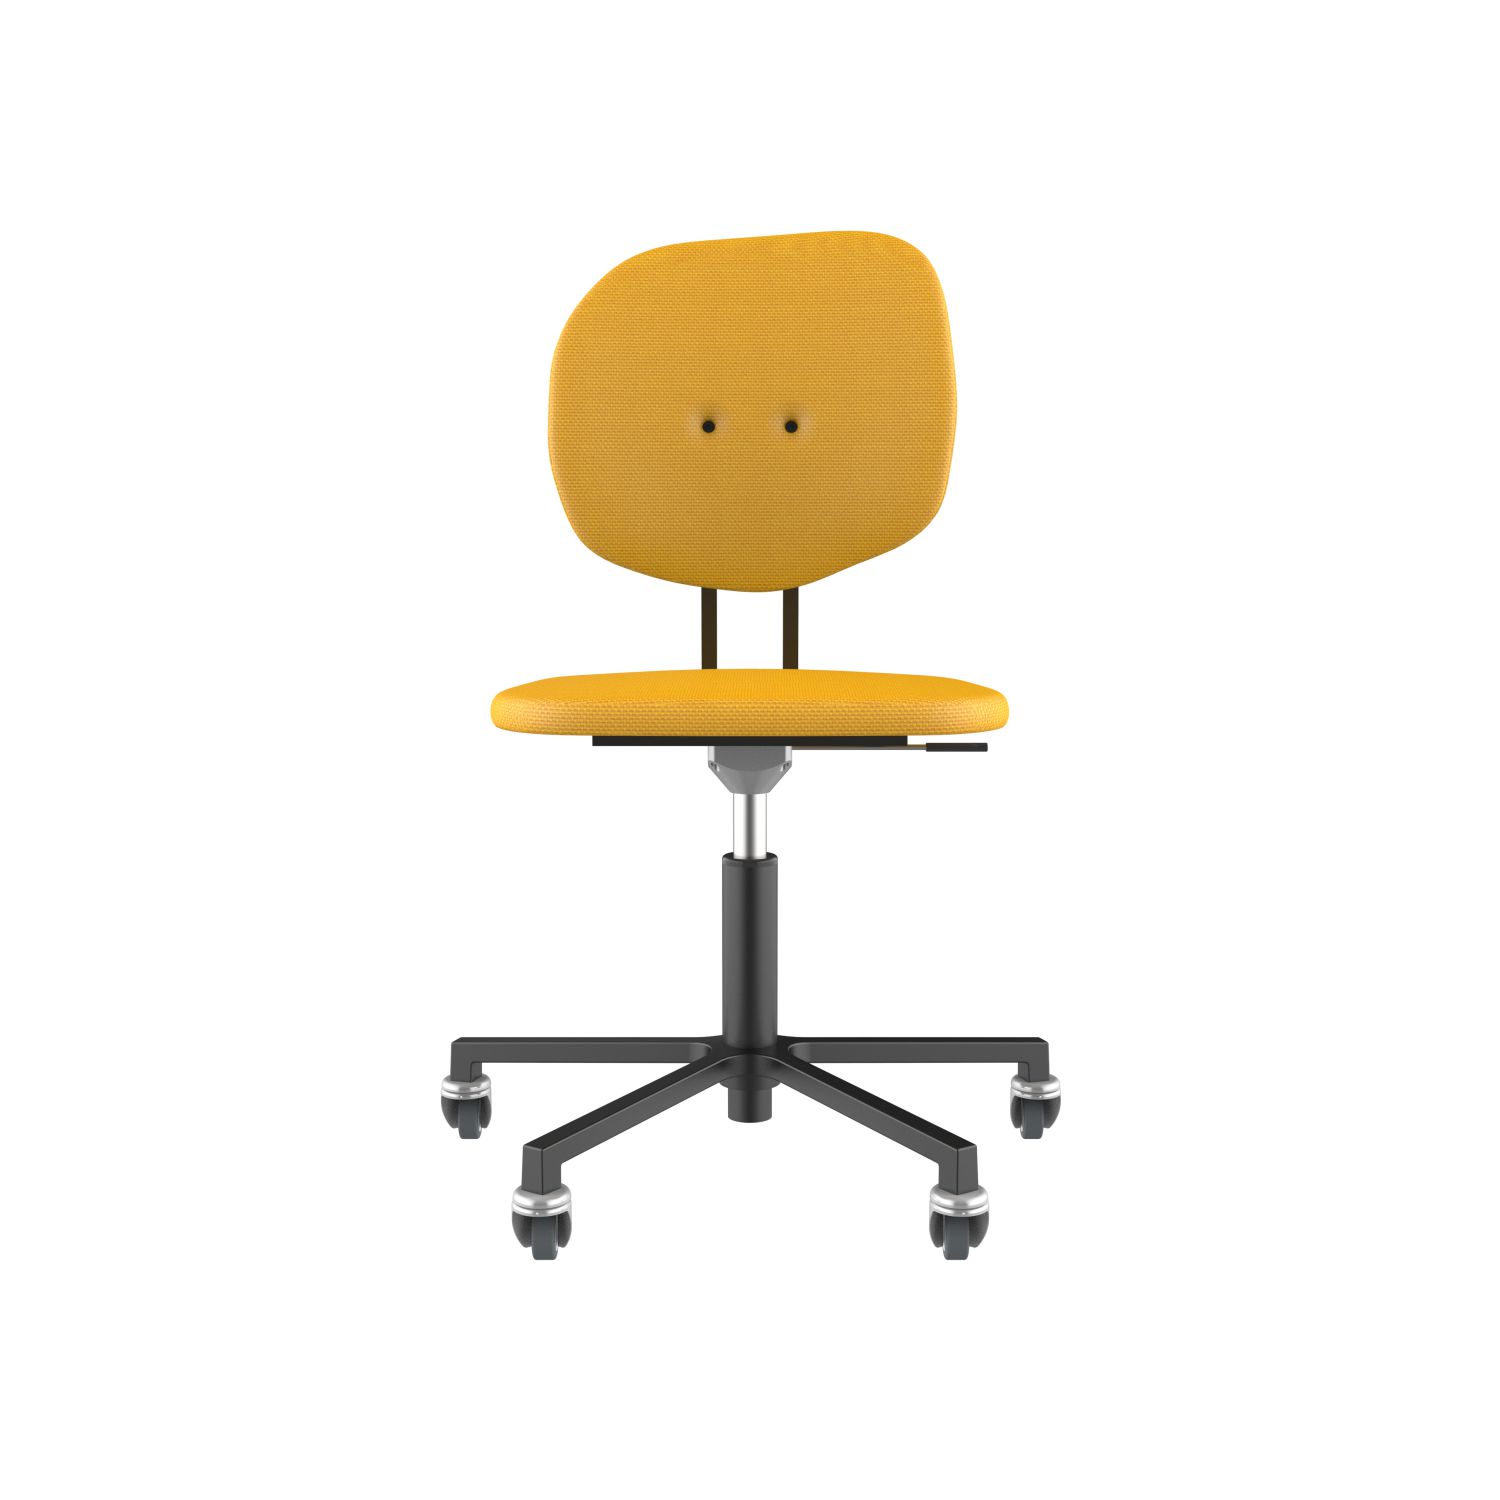 lensvelt maarten baas office chair without armrests backrest h lemon yellow 051 black ral9005 soft wheels